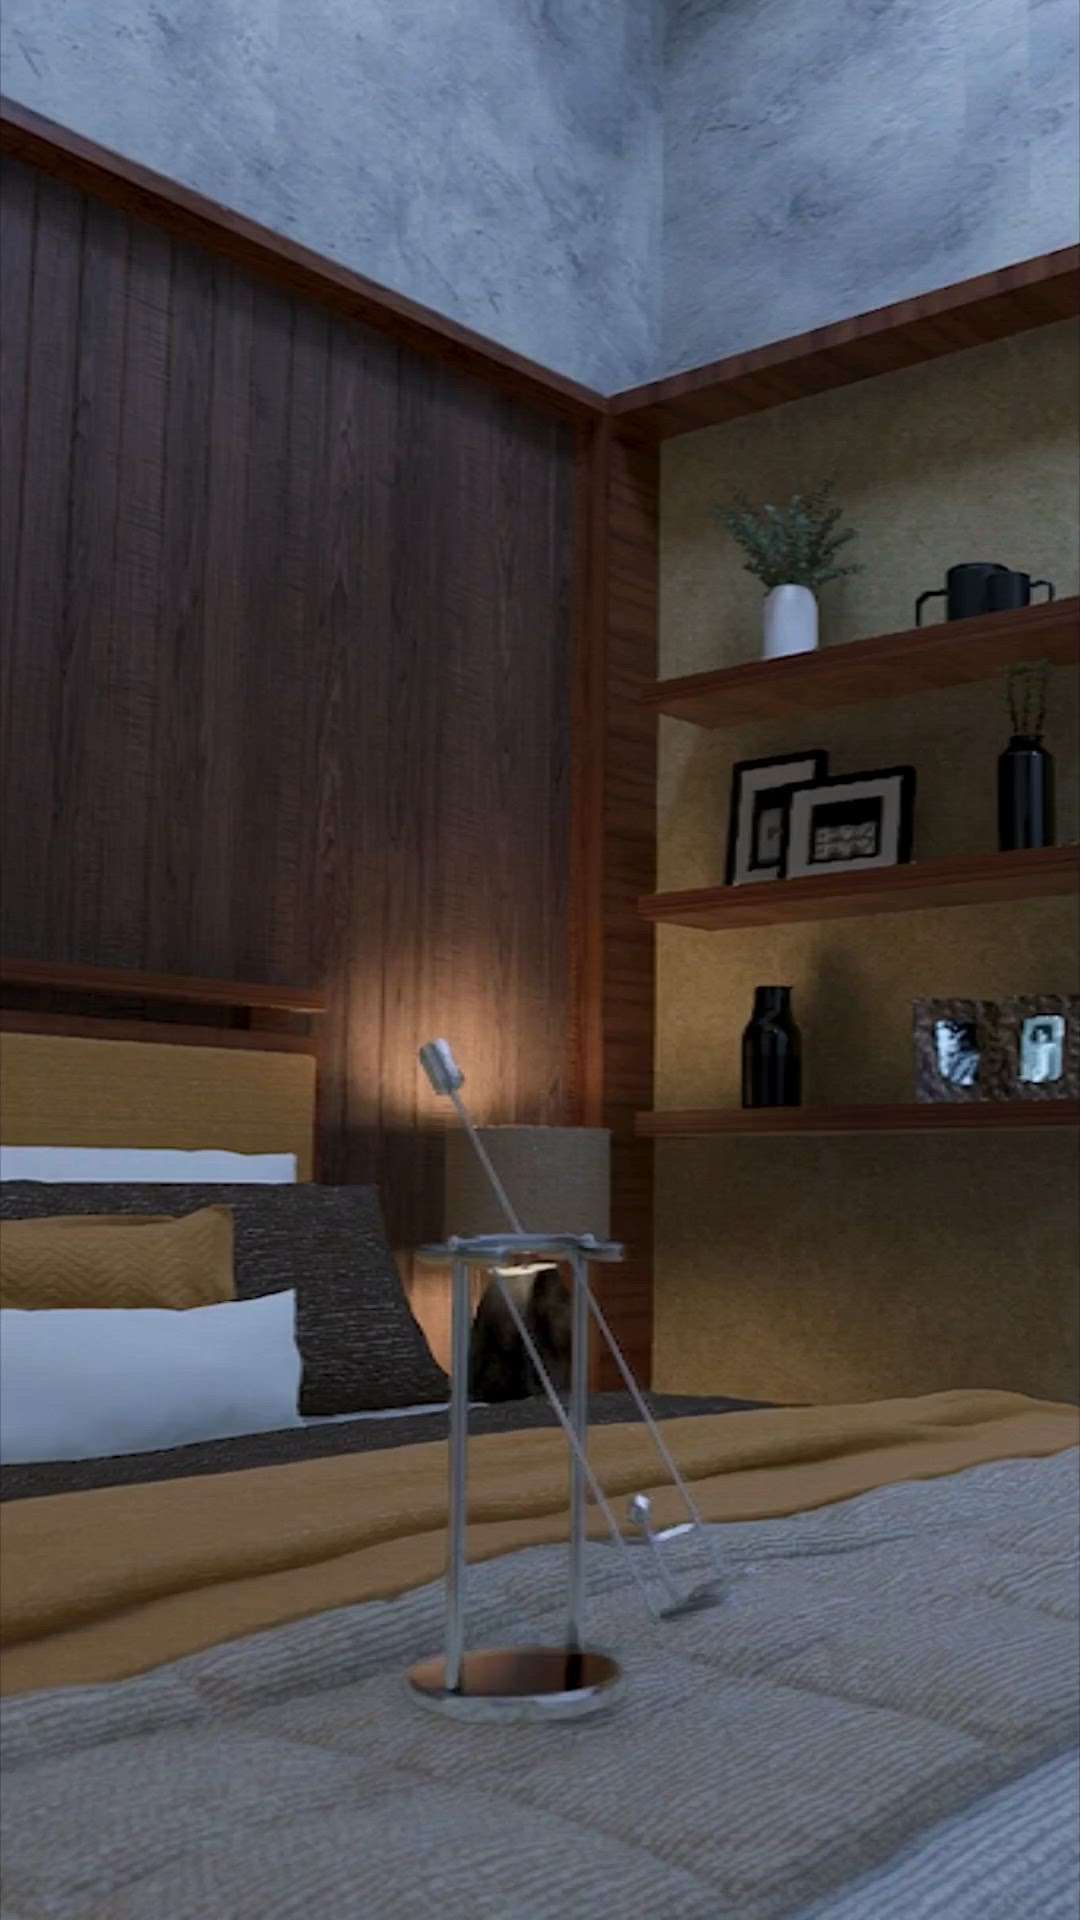 Bedroom animation ❤️❤️   #interior #walkthrough #3dmodeling #3danimationvideo #InteriorDesigner #3dvisualisation